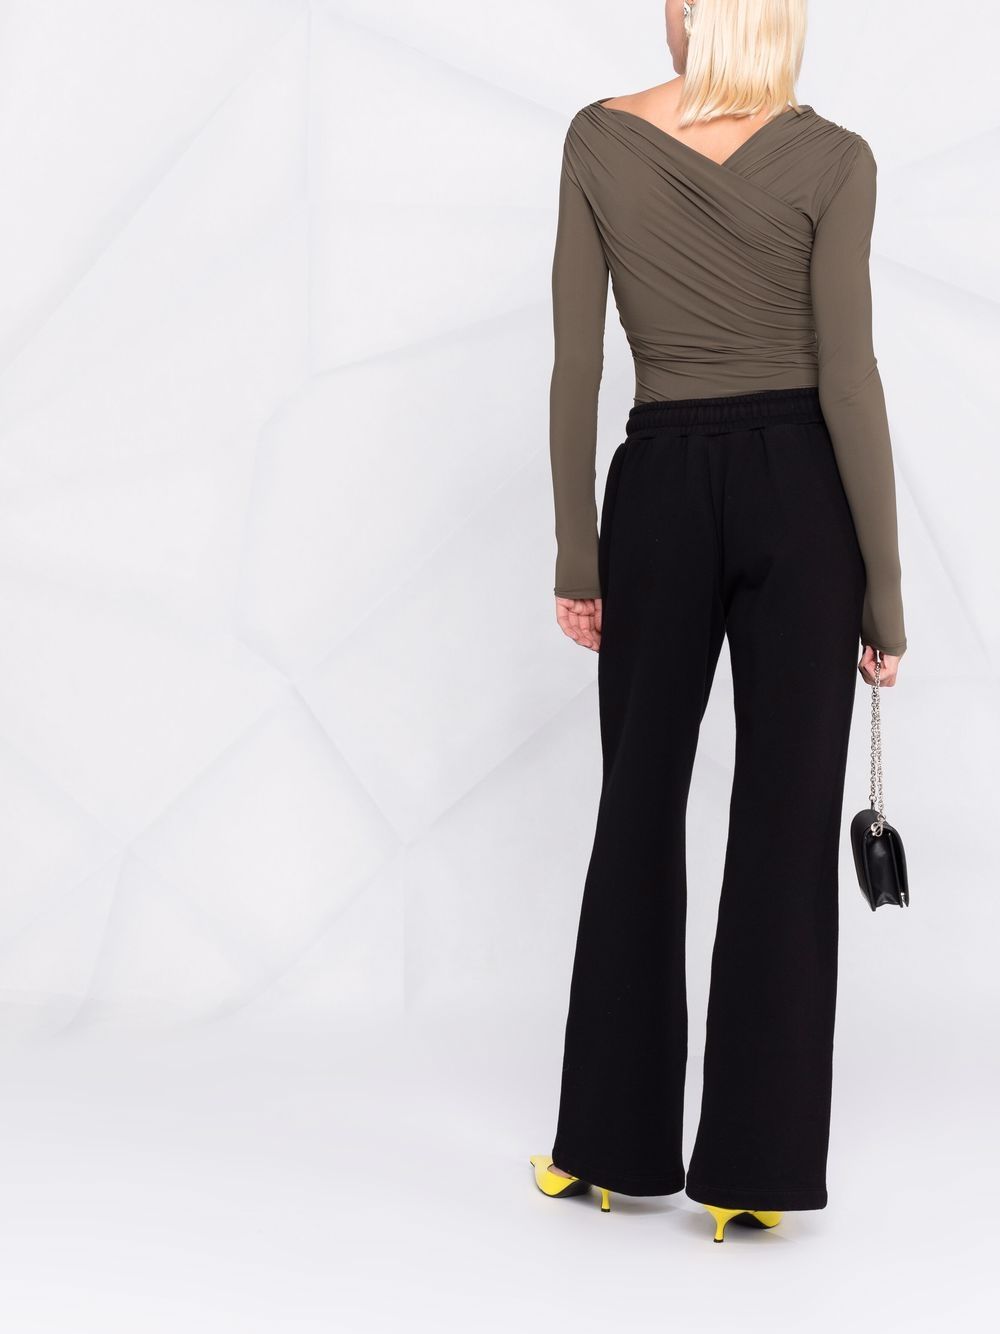 AMBUSH WOMEN Logo-print fleece track pants Black - MAISONDEFASHION.COM